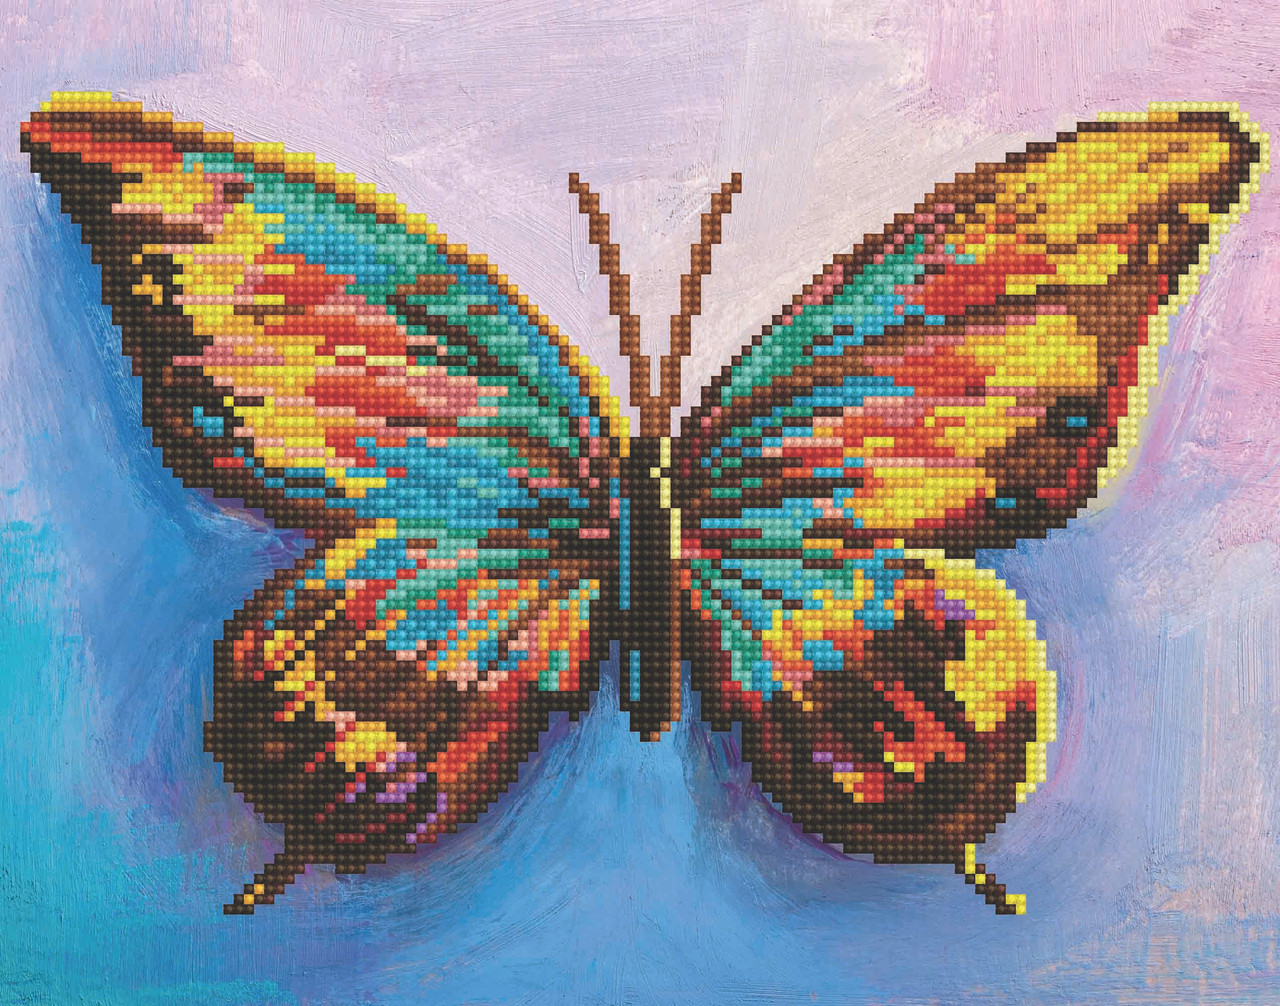 Butterfly Diamond Painting Kits